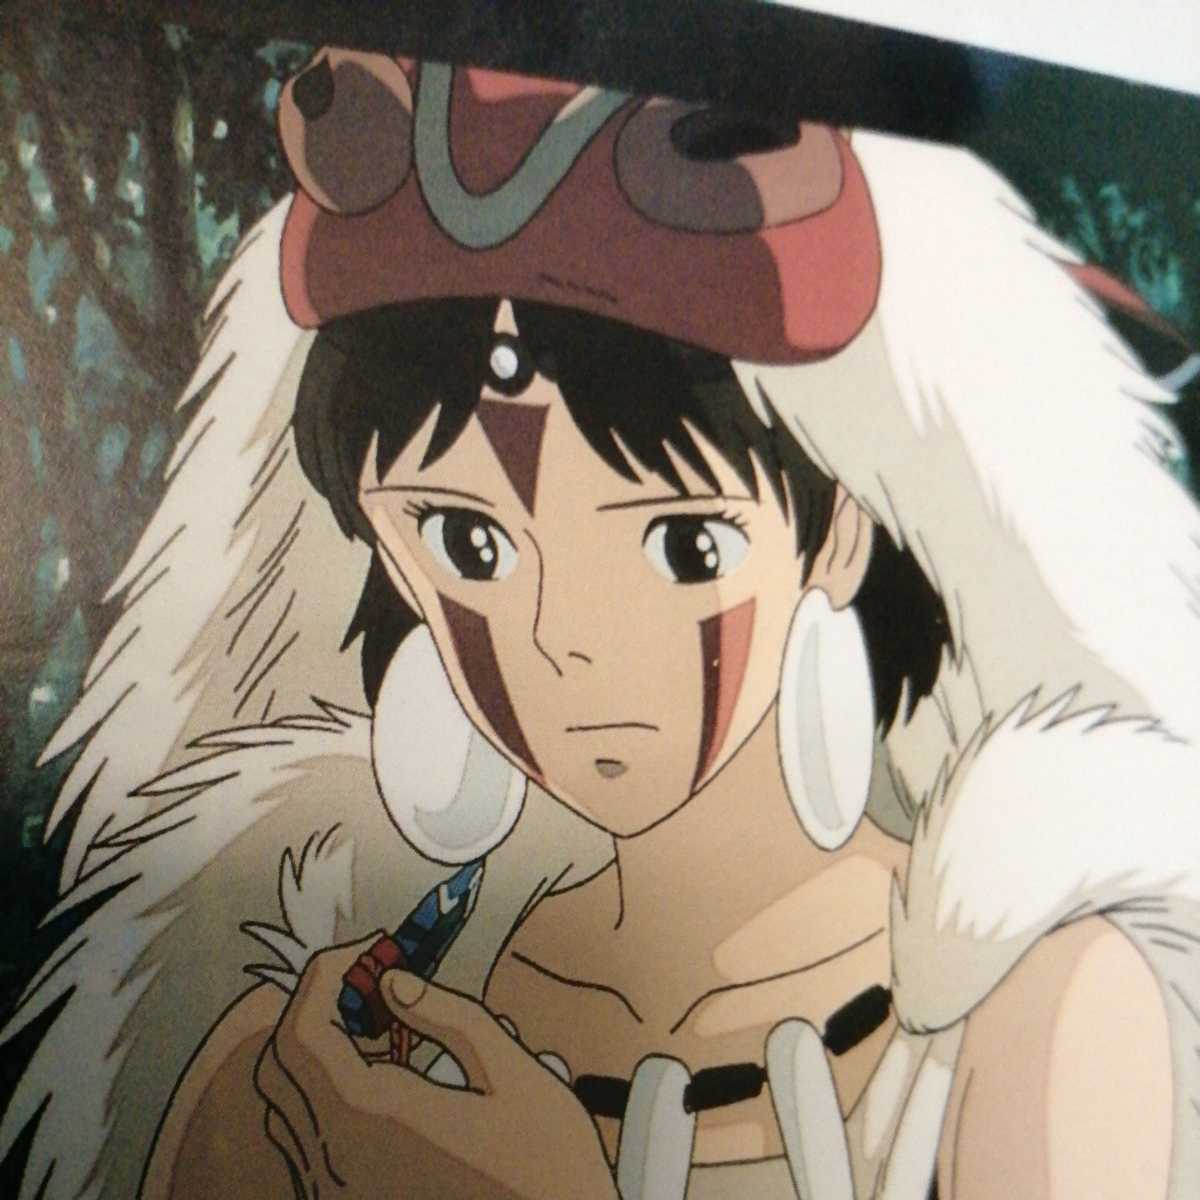  очень редкий![ снят с производства товар ] Studio Ghibli Princess Mononoke [ рамка товар ] открытка постер стекло доска Ghibli карта. Miyazaki .q